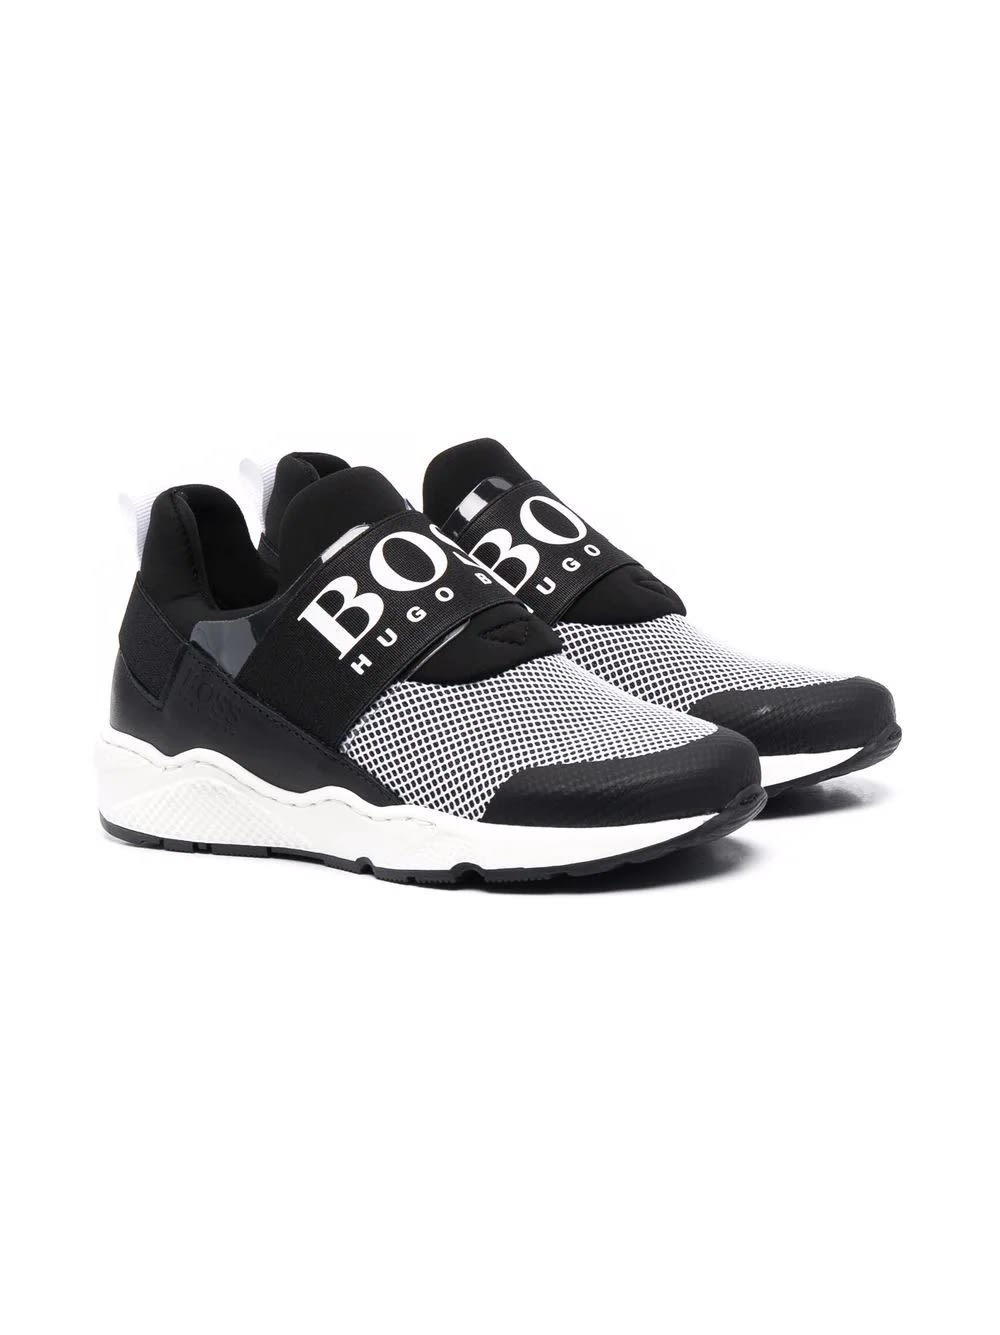 Hugo Boss Slip-on Sneakers With Print